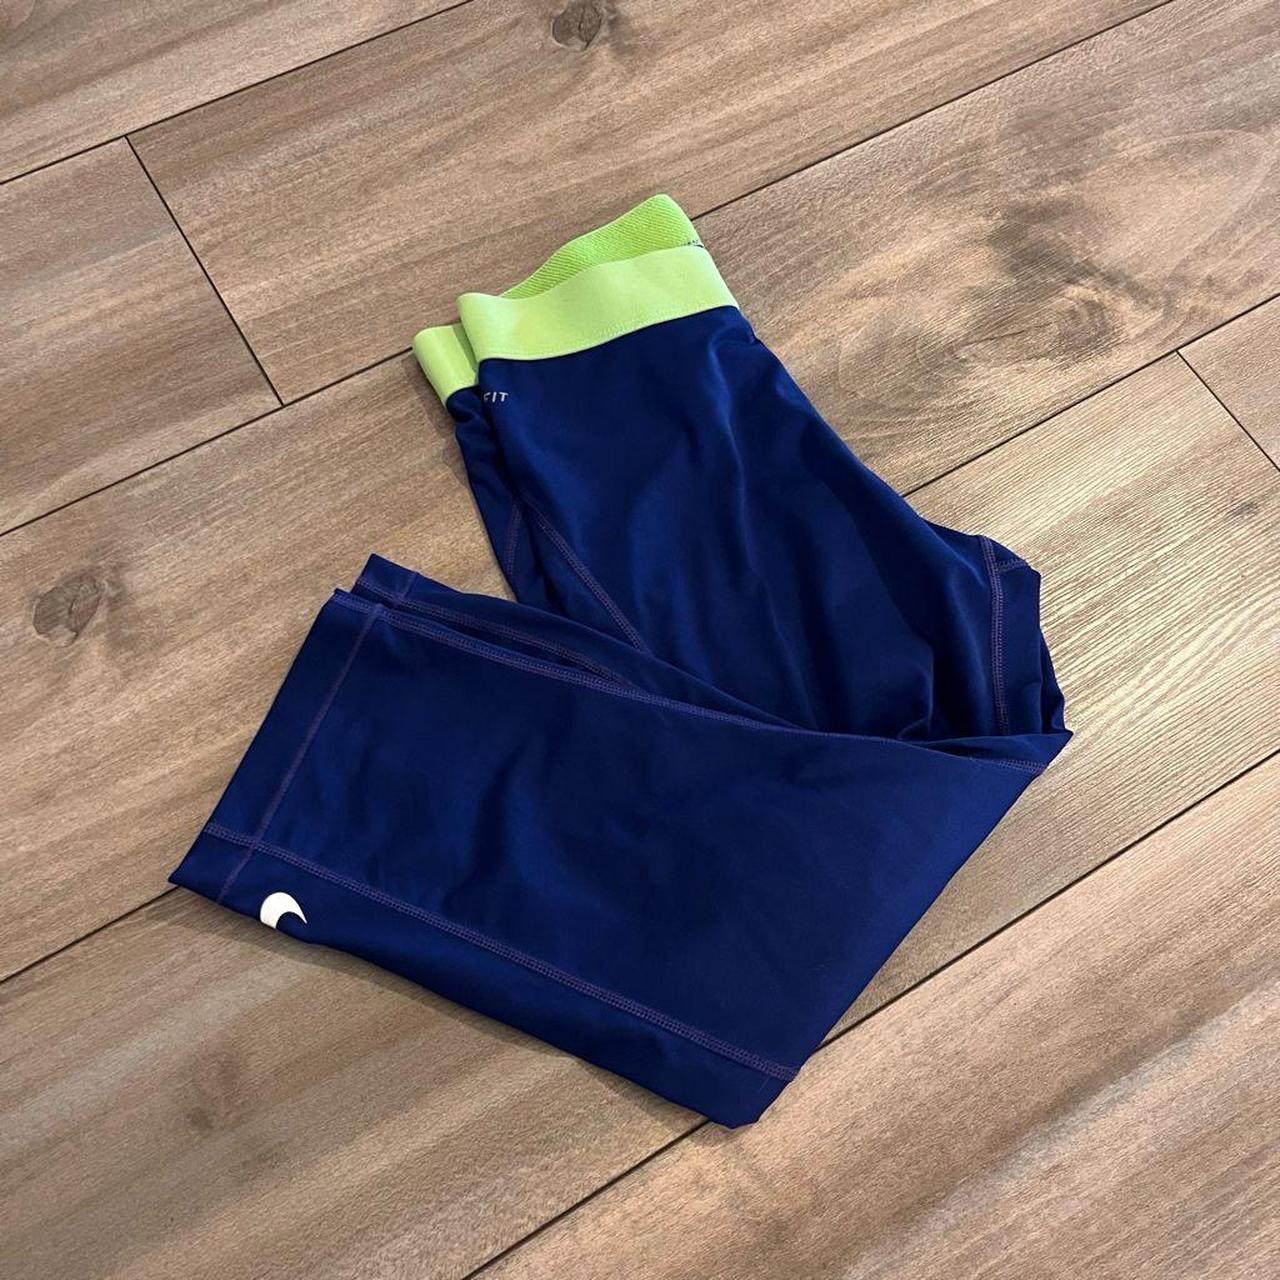 Nike Pro gym leggings in blue size small £15 in good - Depop